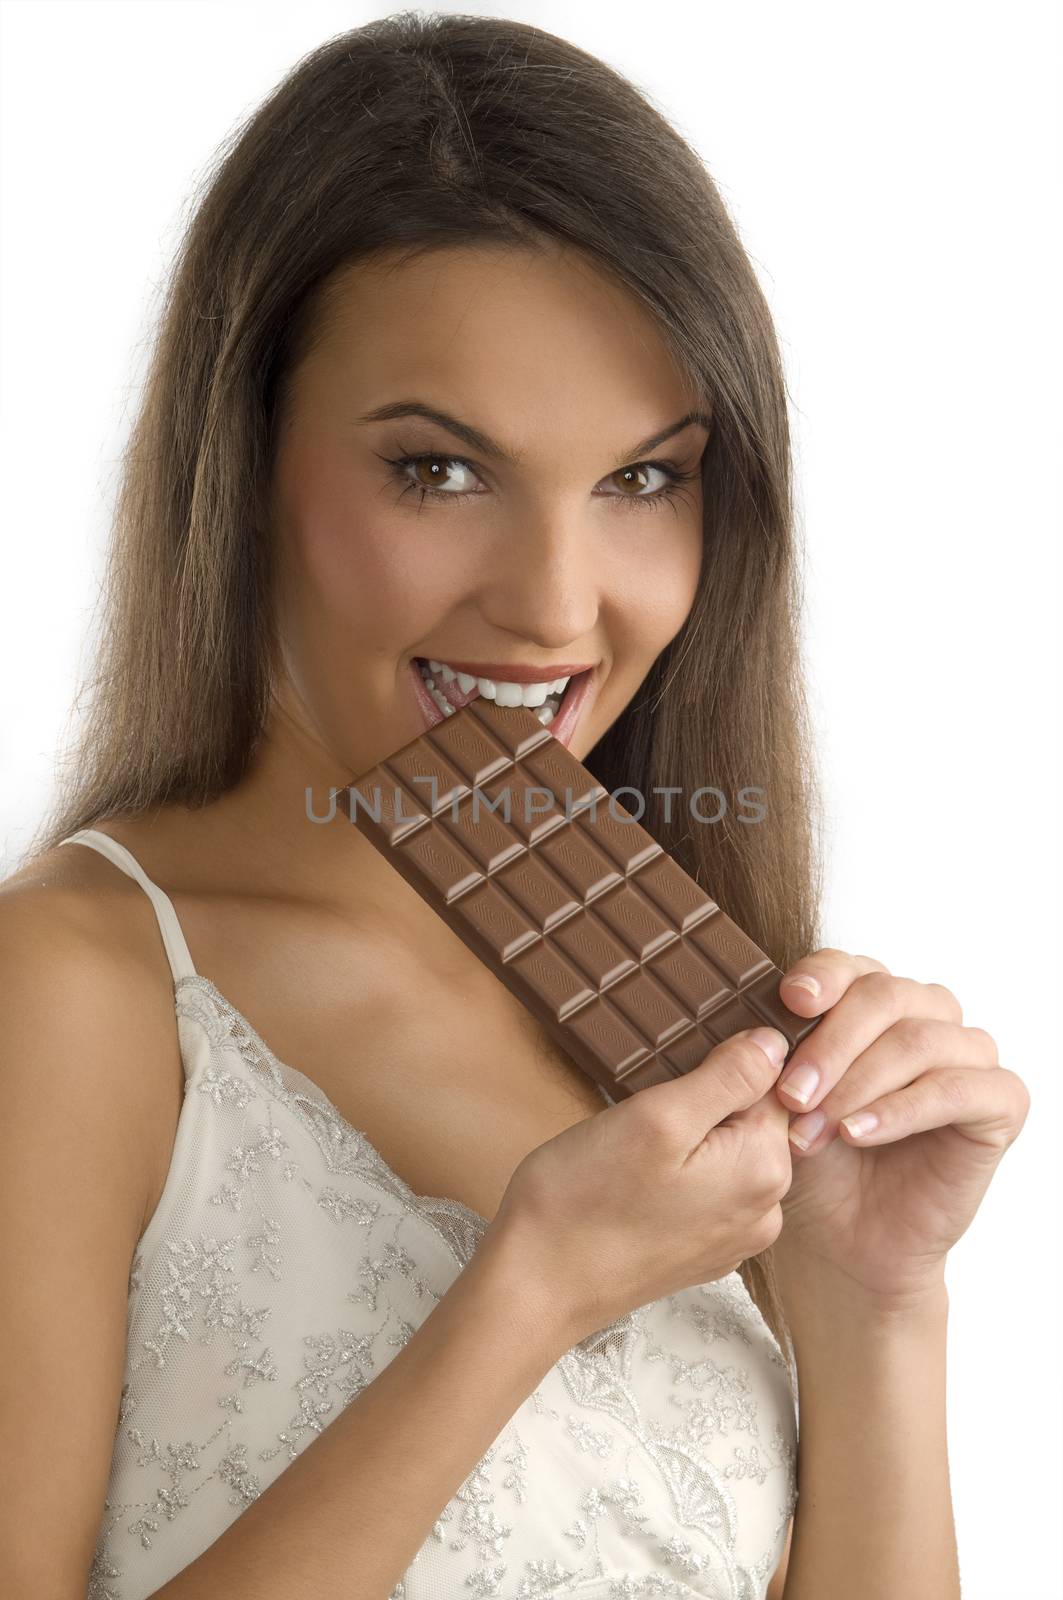 biting chocolate by fotoCD